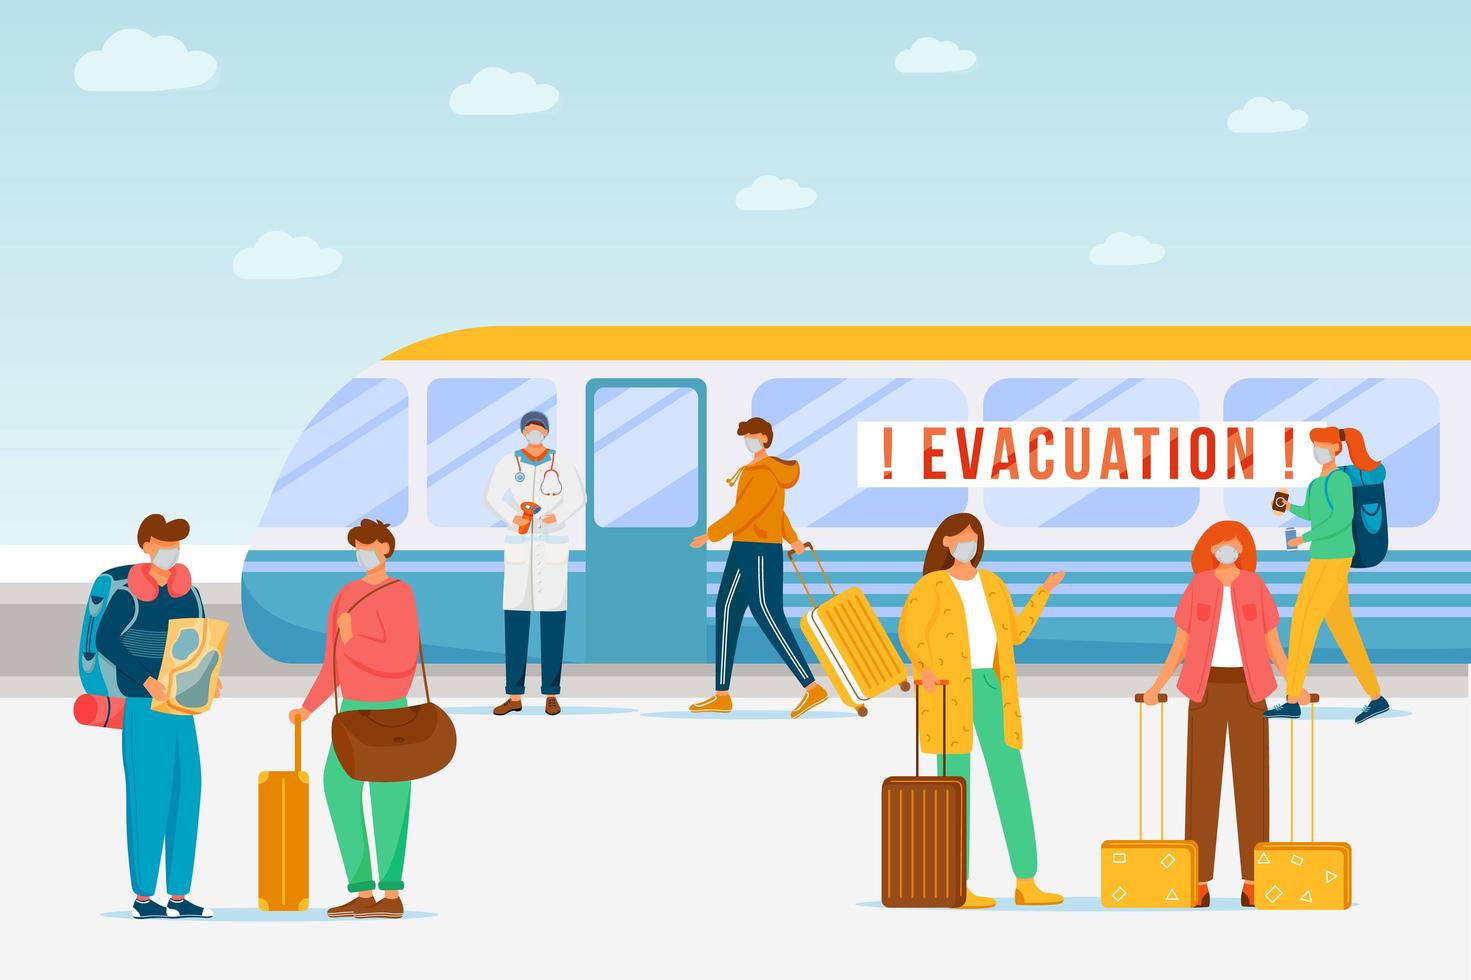 Emergency train evacuation vector